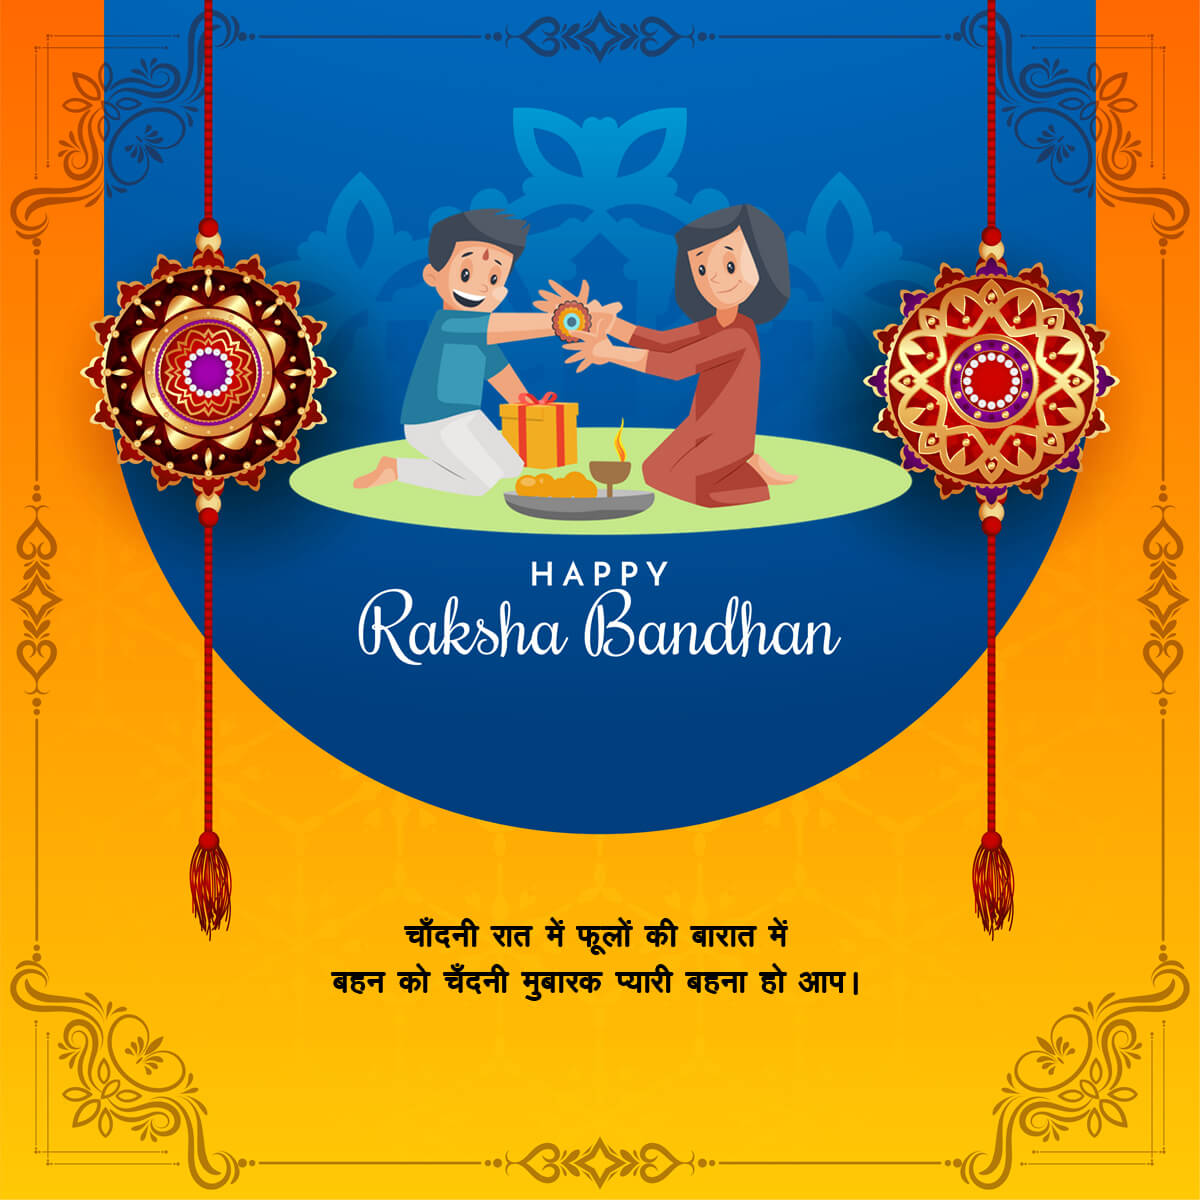 raksha bandhan brother and sister Images Download